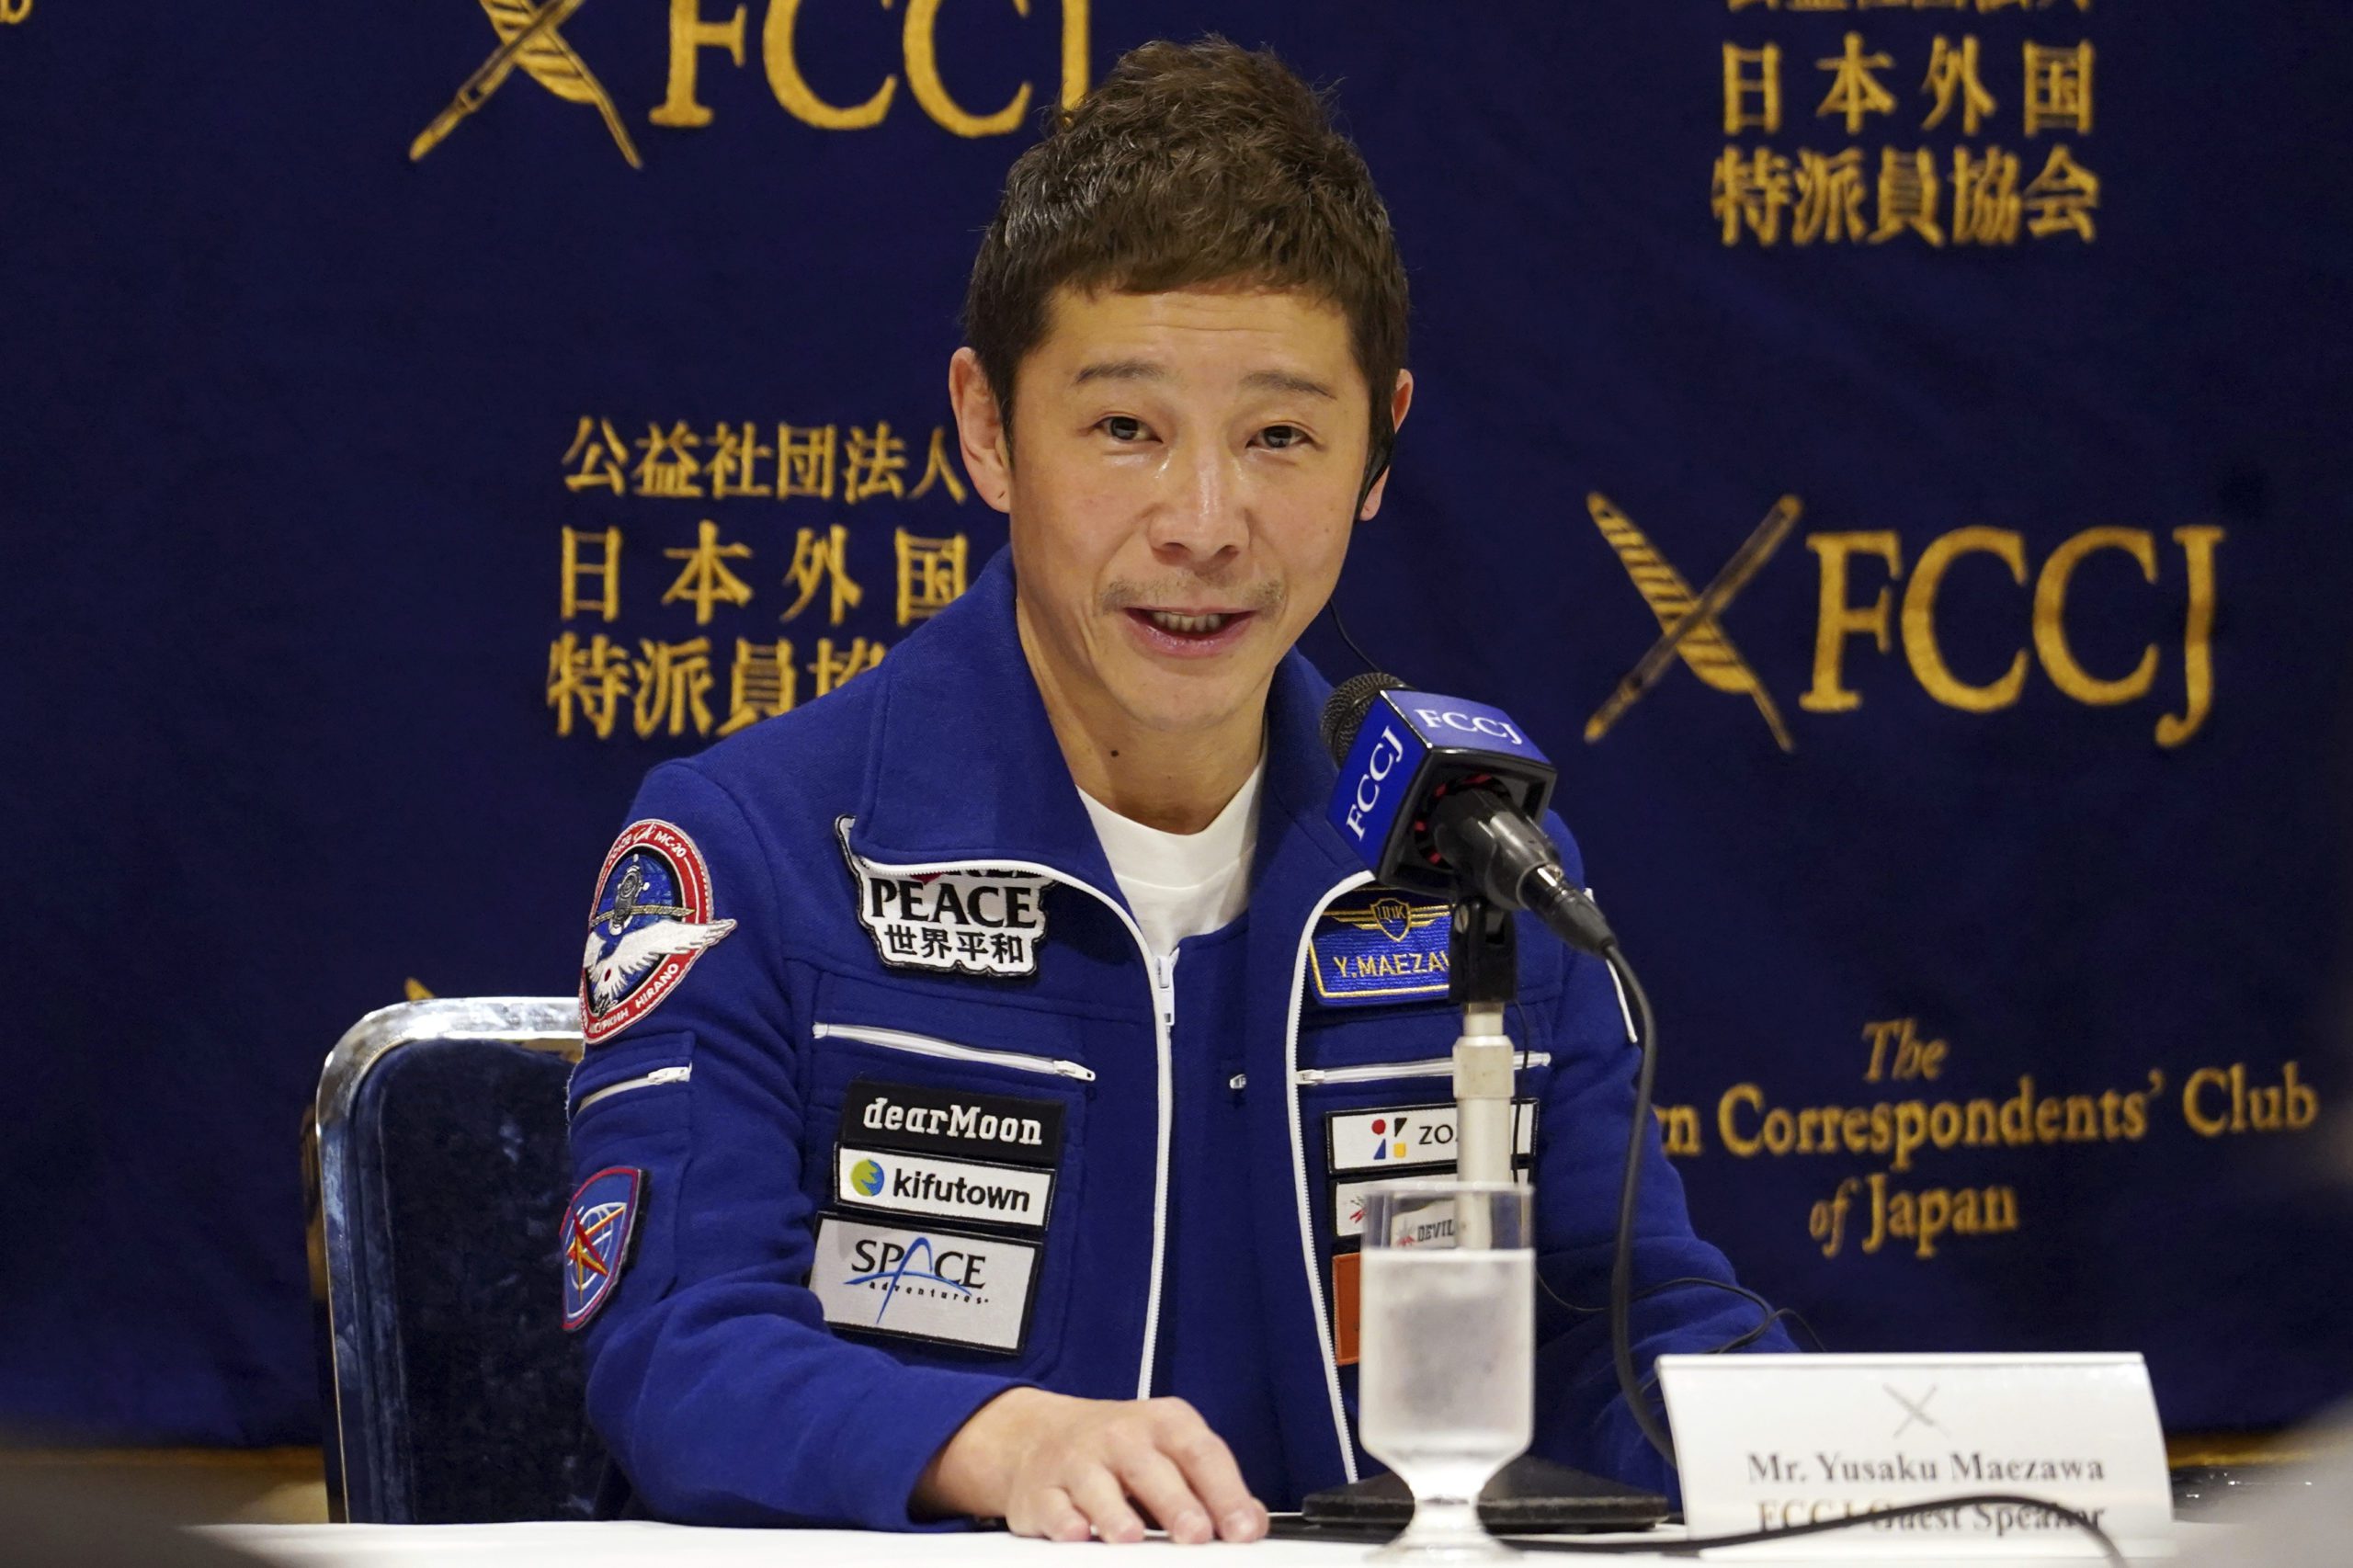 Billionaire Yusaku Meizawa is back in space, but not alone.